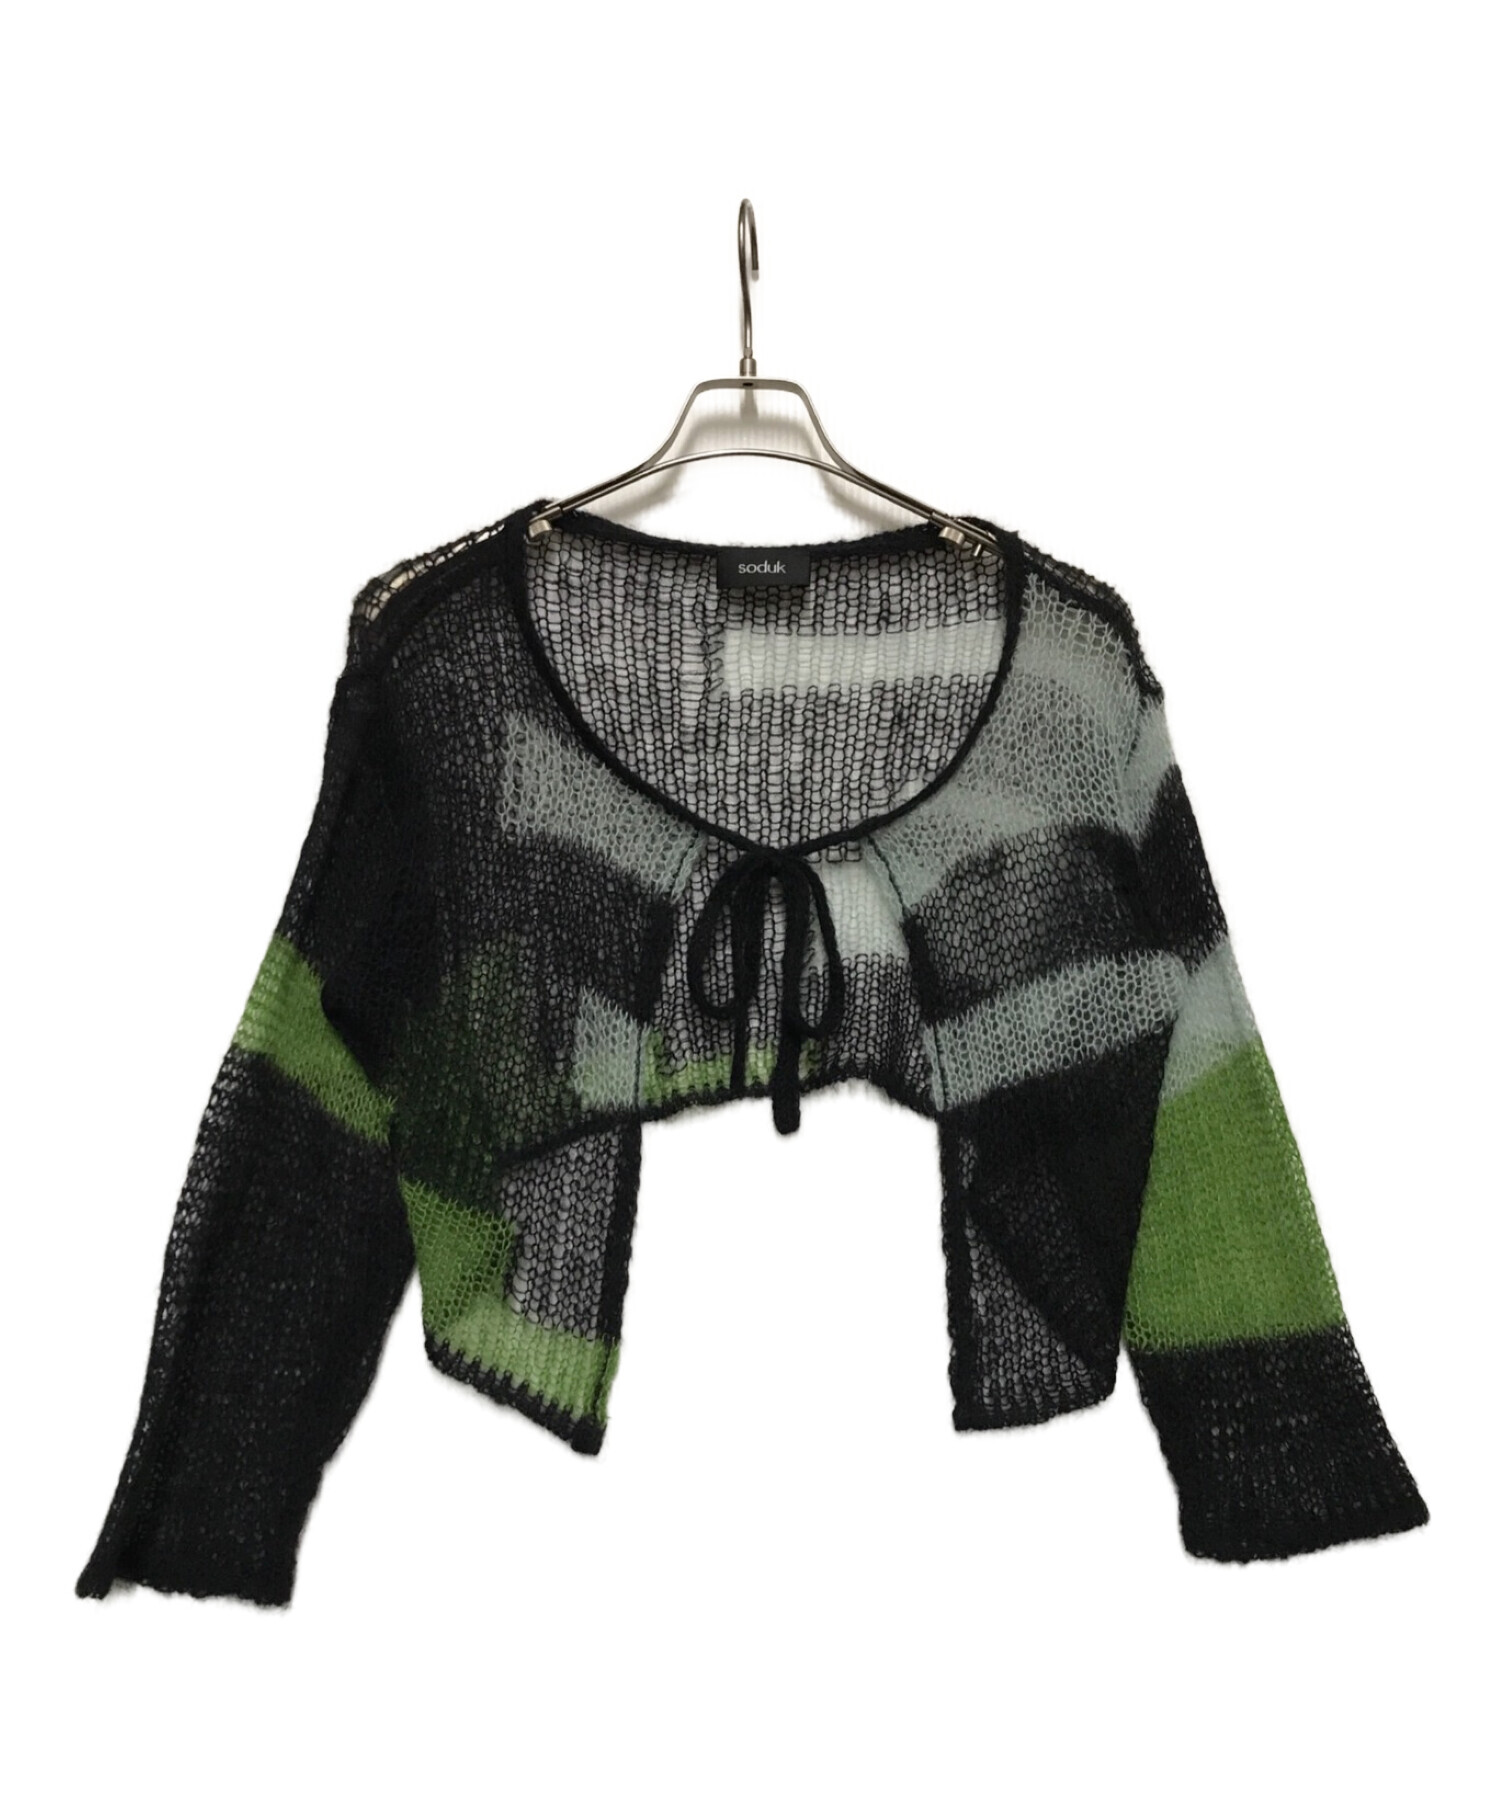 soduk (スドーク) patchwork knit CD ブラック×グリーン サイズ:FREE